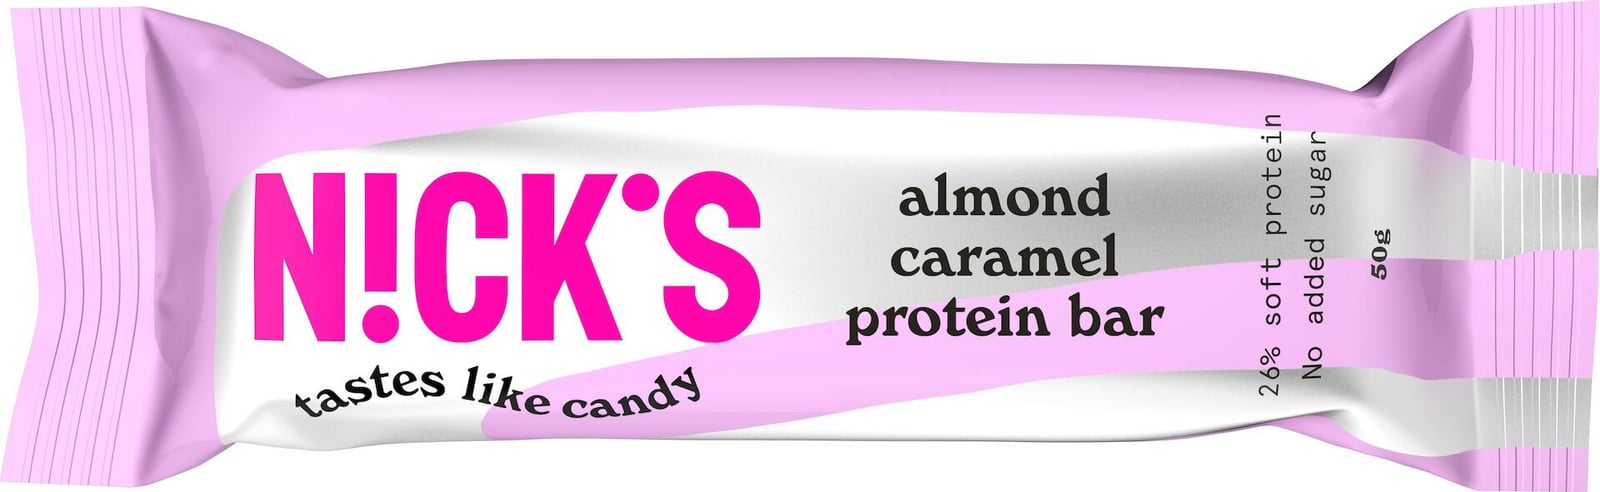 Nick's Proteinbar Almond Caramel  50g